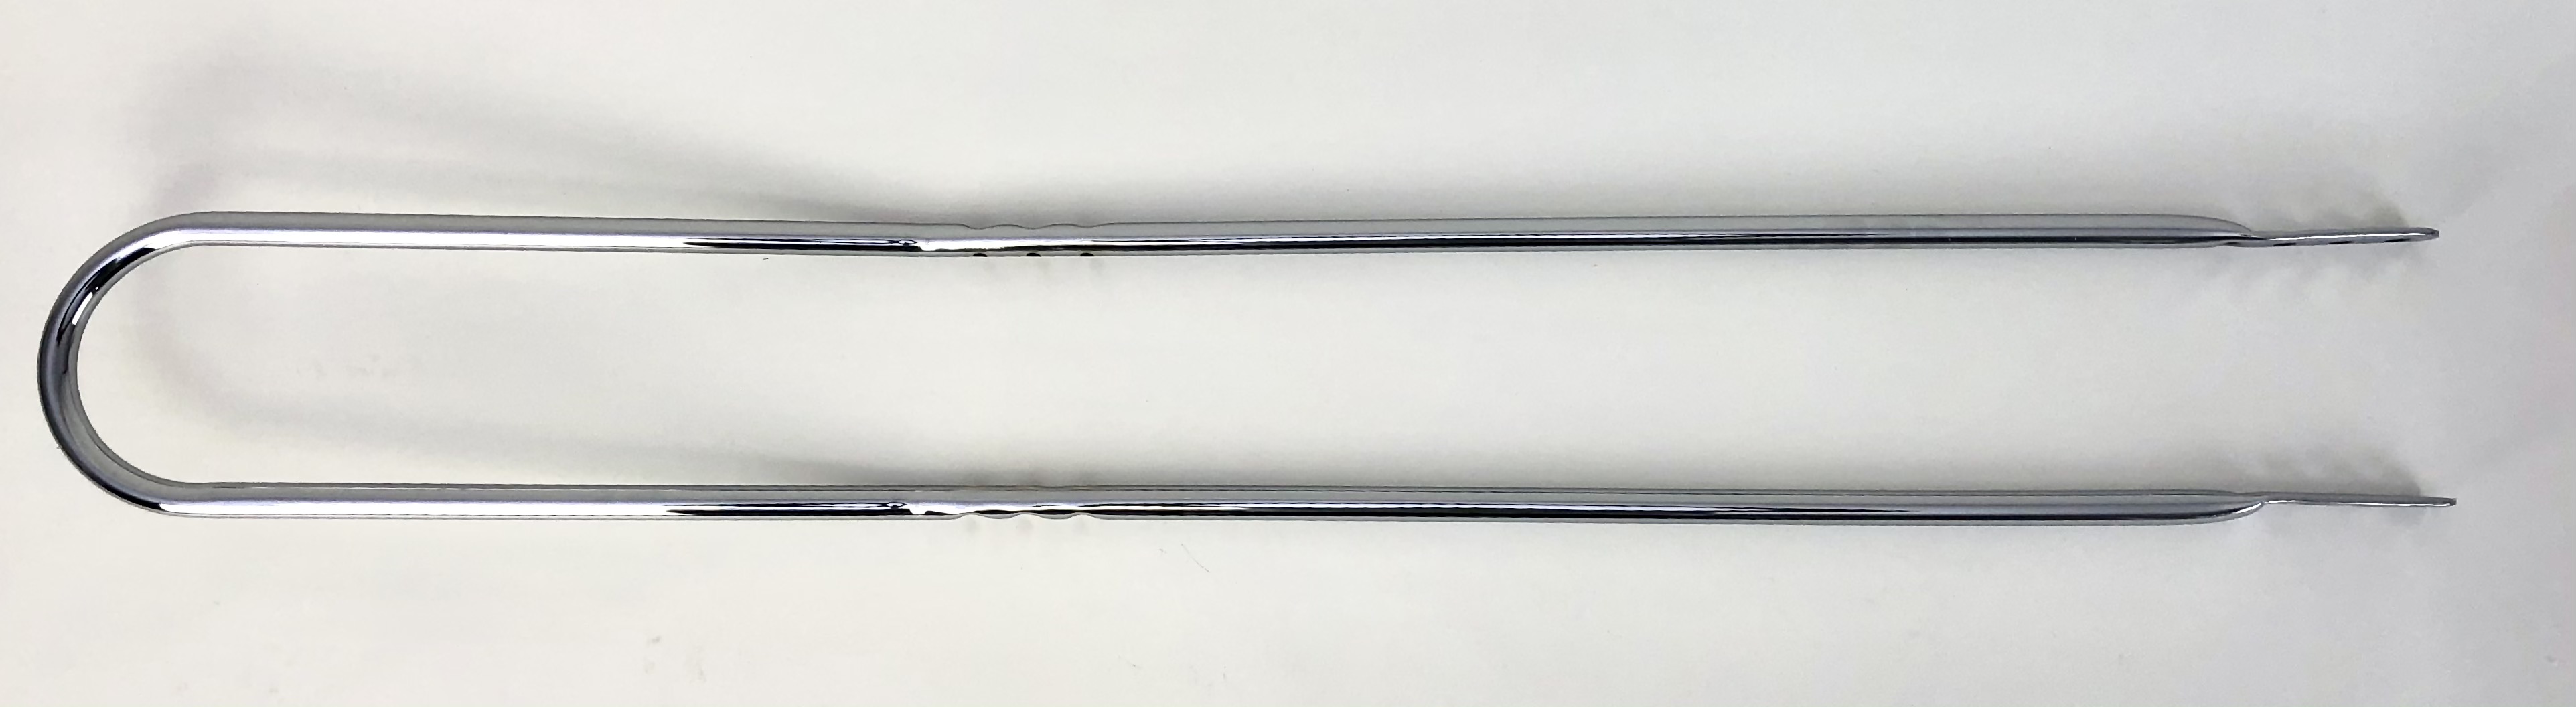 Sissybar 107 cm long, chromé